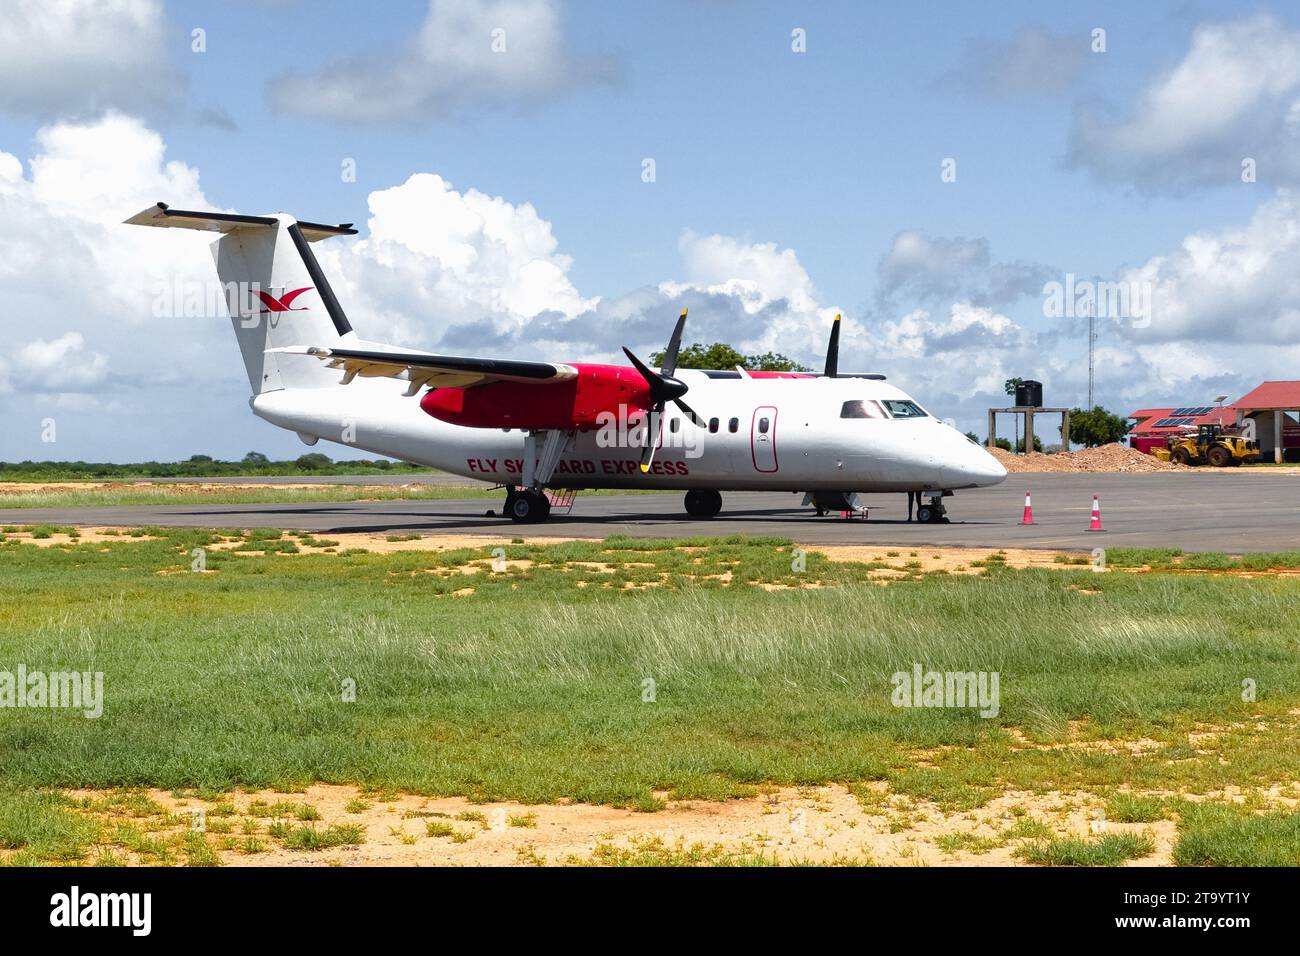 A FlySkyward Express Kenya Aeroplane in Manda Airport in Lamu Isand, Kenya Stock Photo